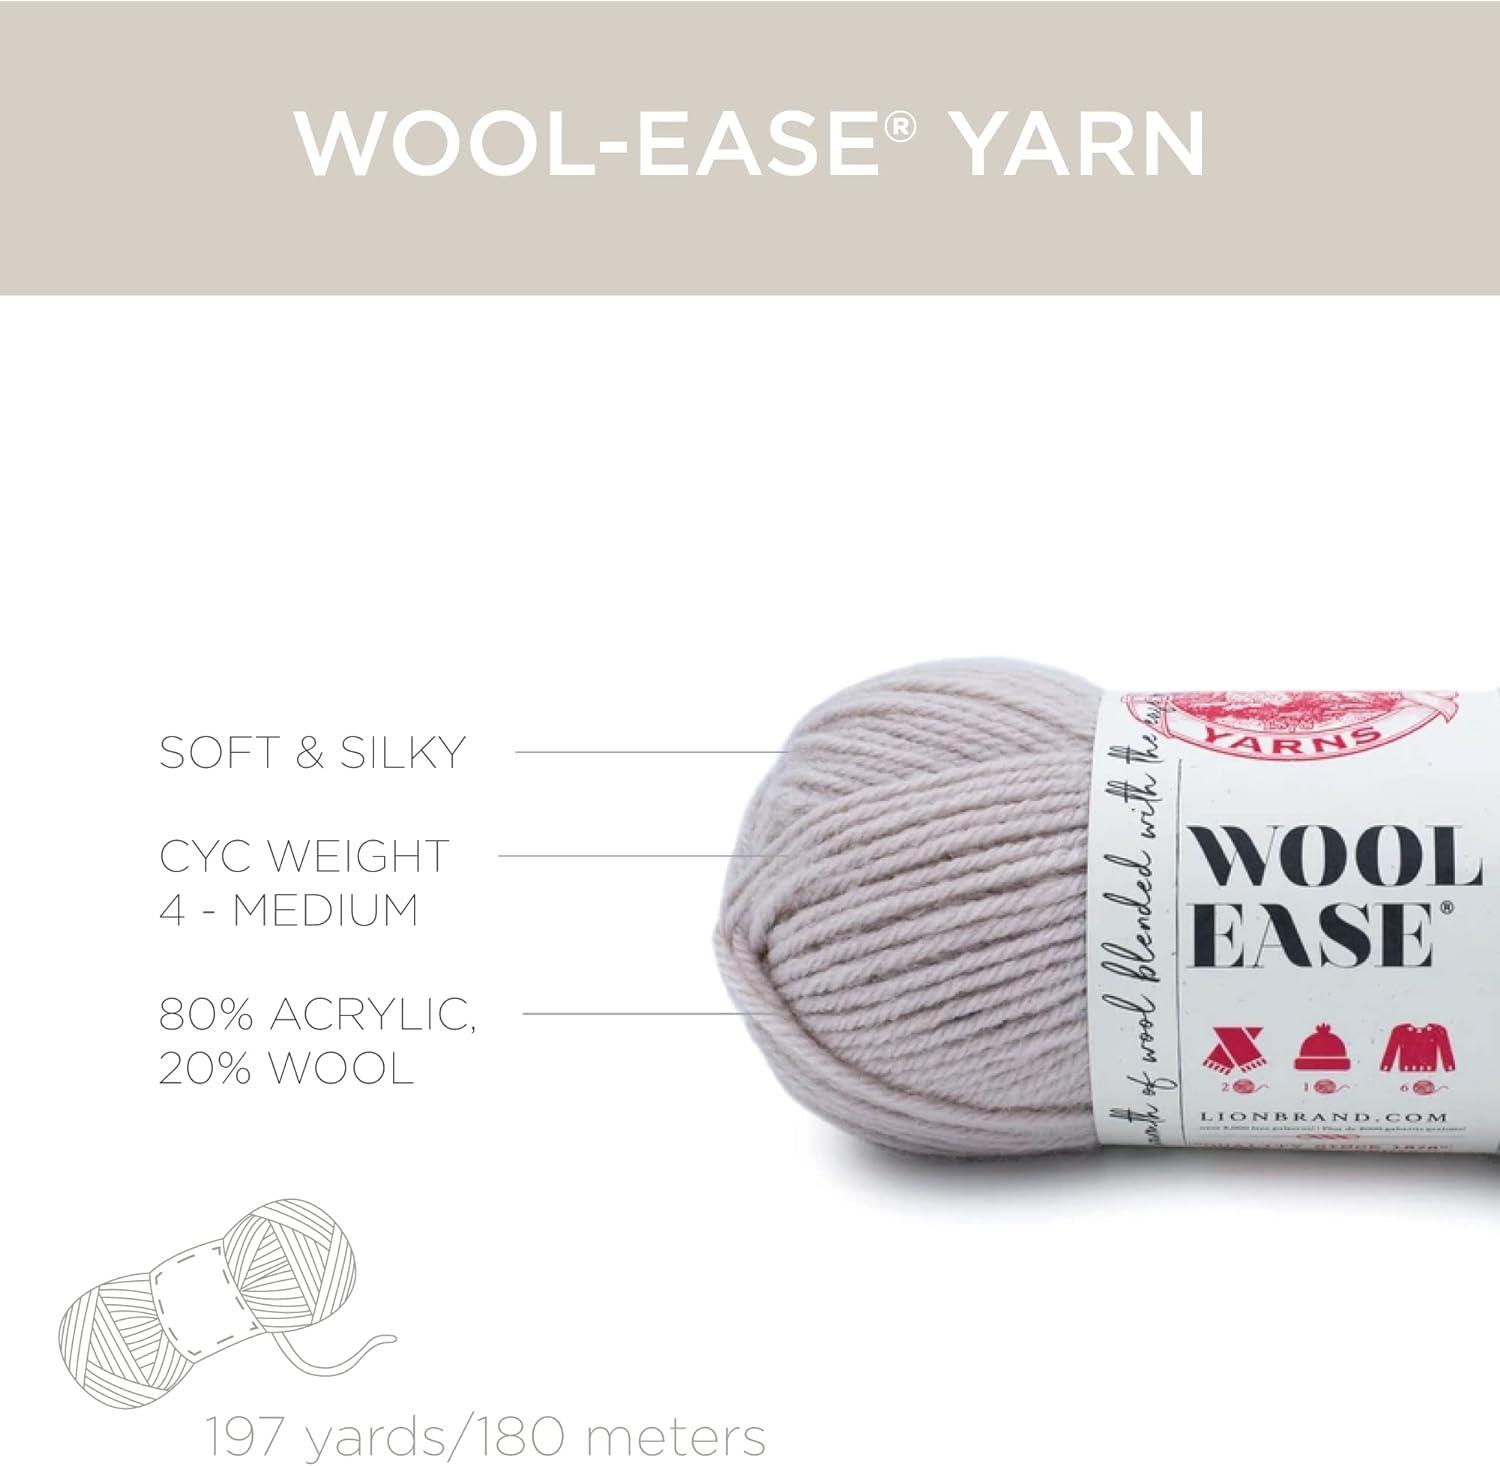 3 Pack) Lion Brand Yarn Wool-Ease Yarn Grey Heather 3 Pack Grey Heather